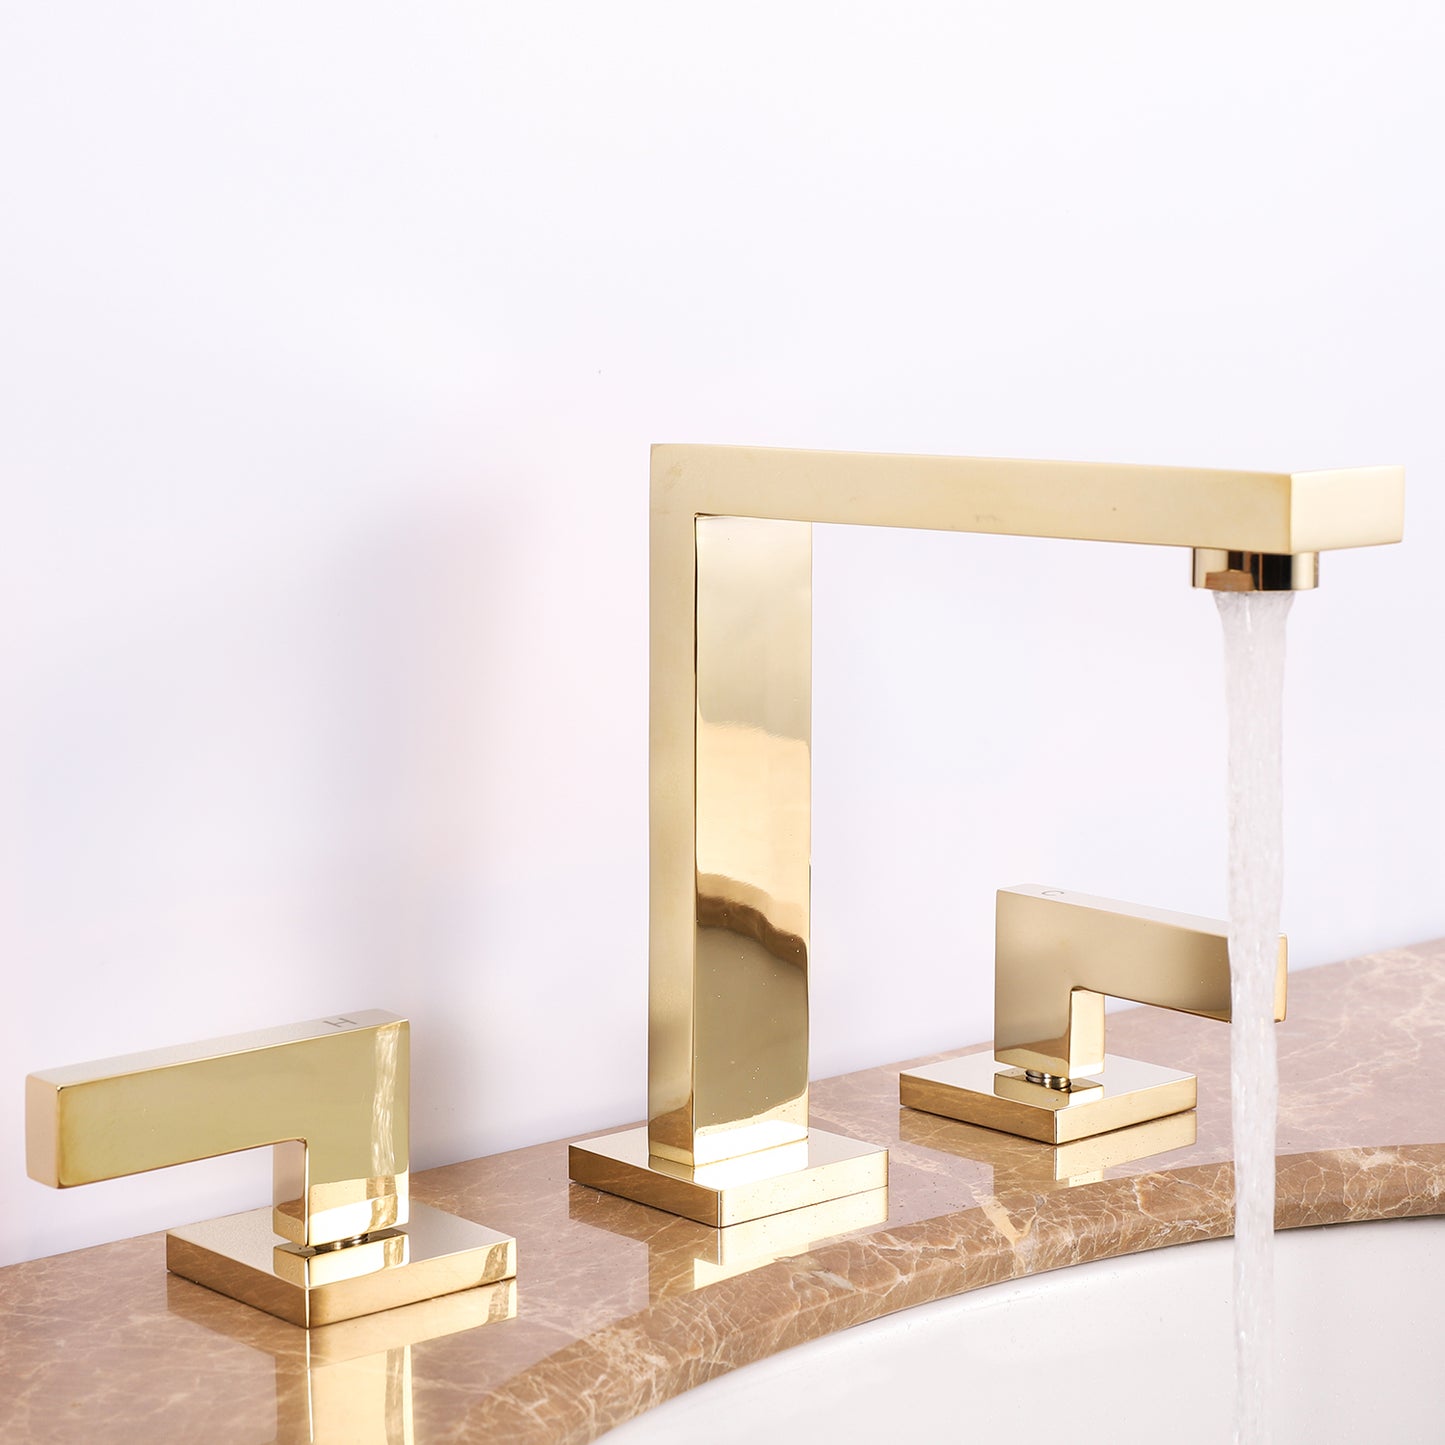 Eviva Sleek 2 Handles (3 Holes) Gold Bathroom Sink Faucet